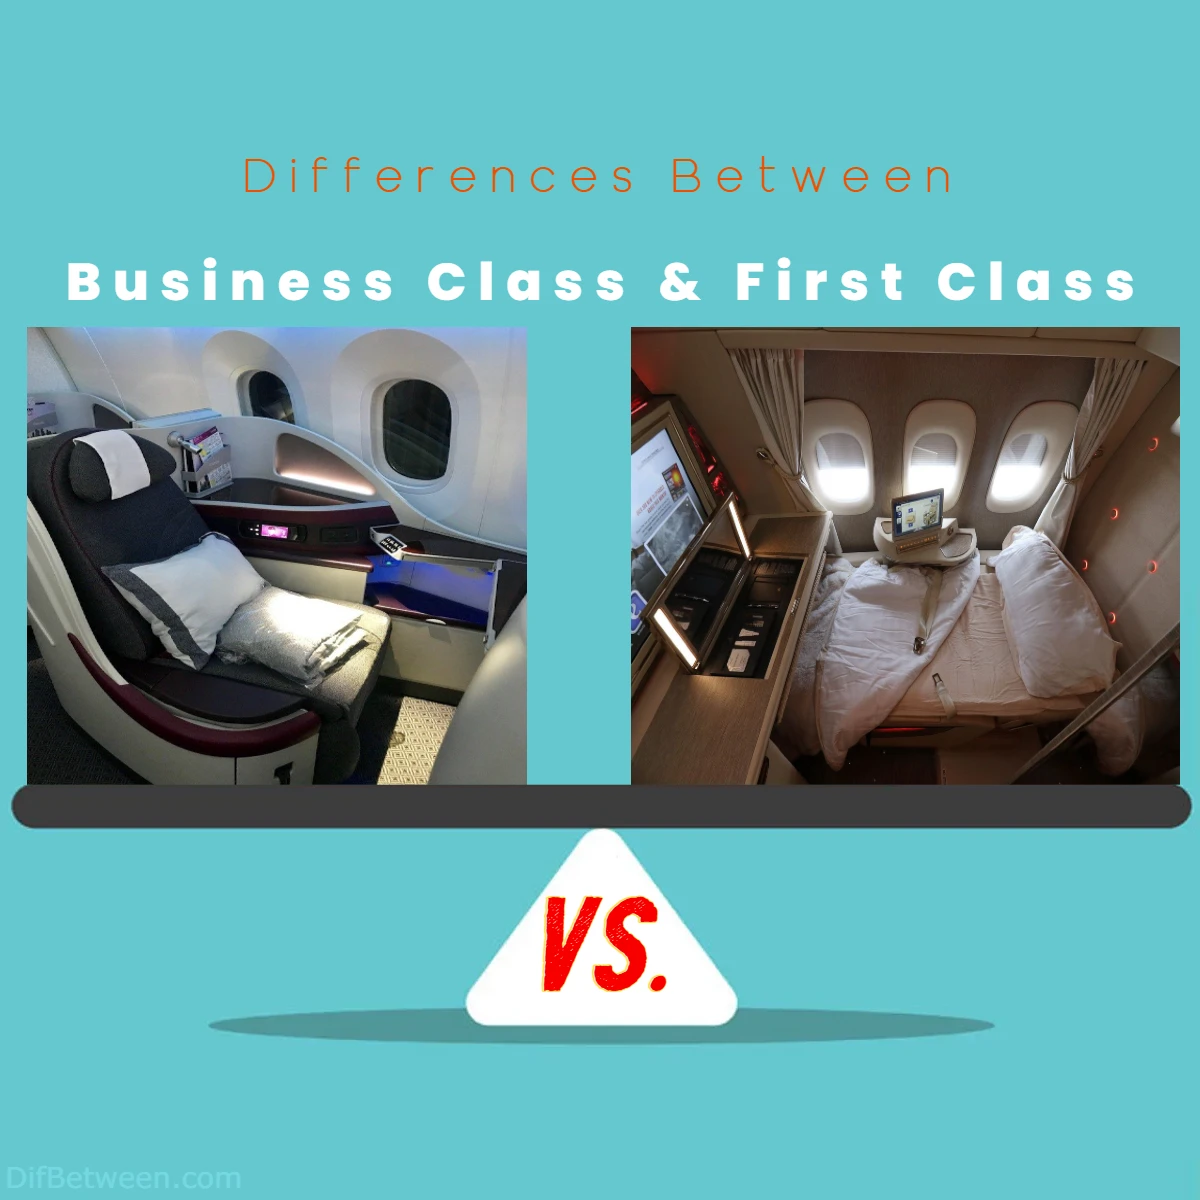 Differences Between Business Class vs First Class